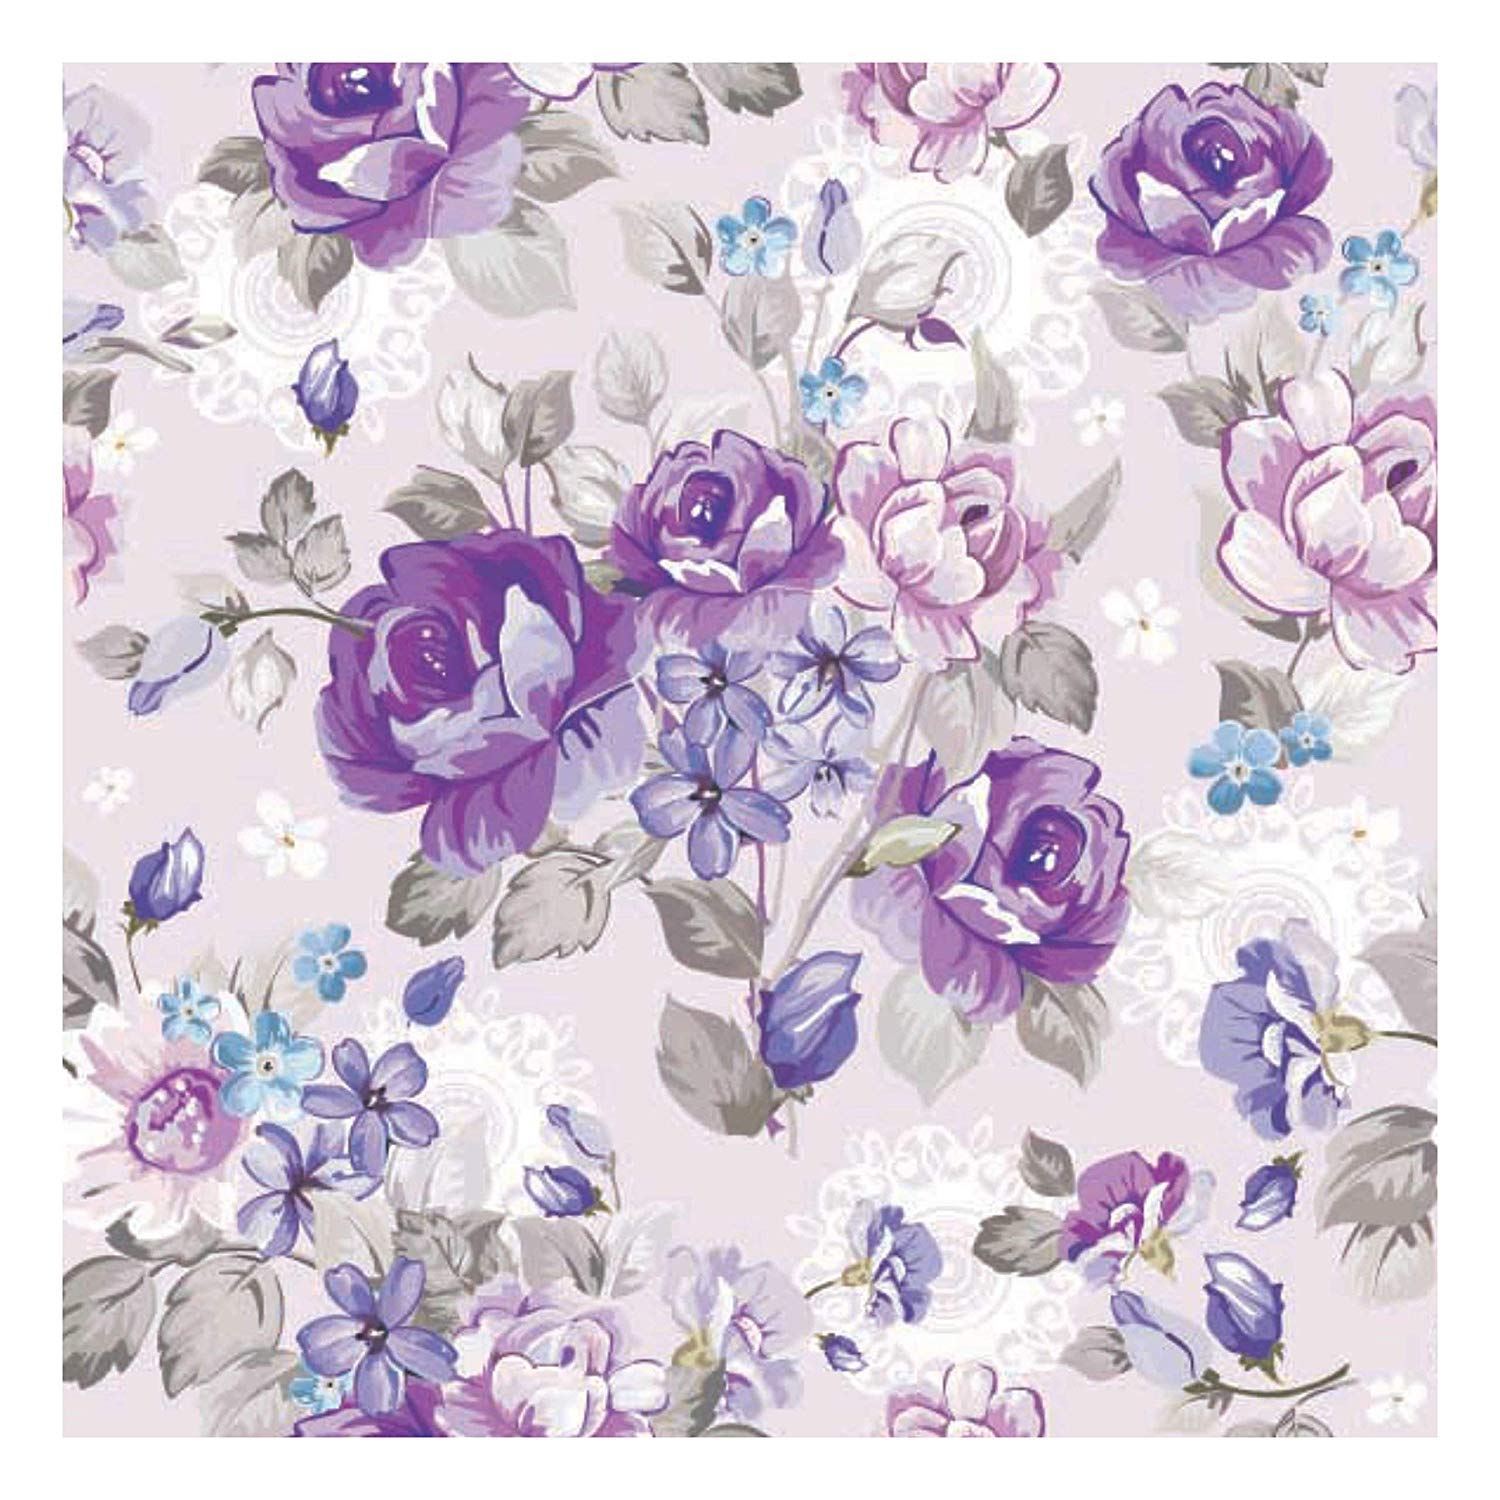 PRINTELLIGENT Purple Floral Wallpaper Self Adhesive with Elegant